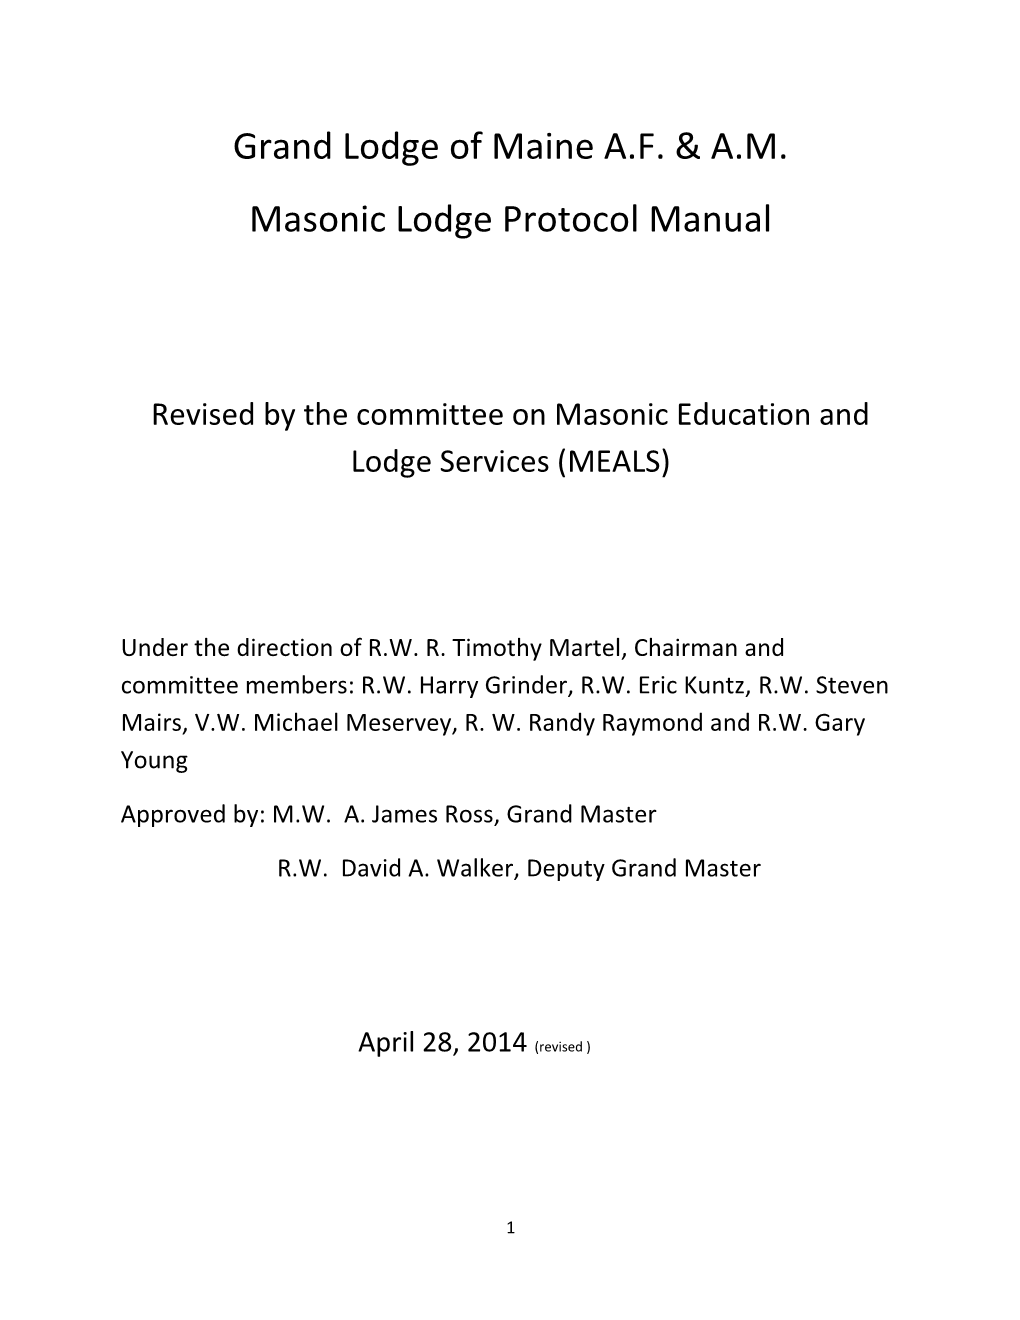 Grand Lodge of Maine A.F. & A.M. Masonic Lodge Protocol Manual